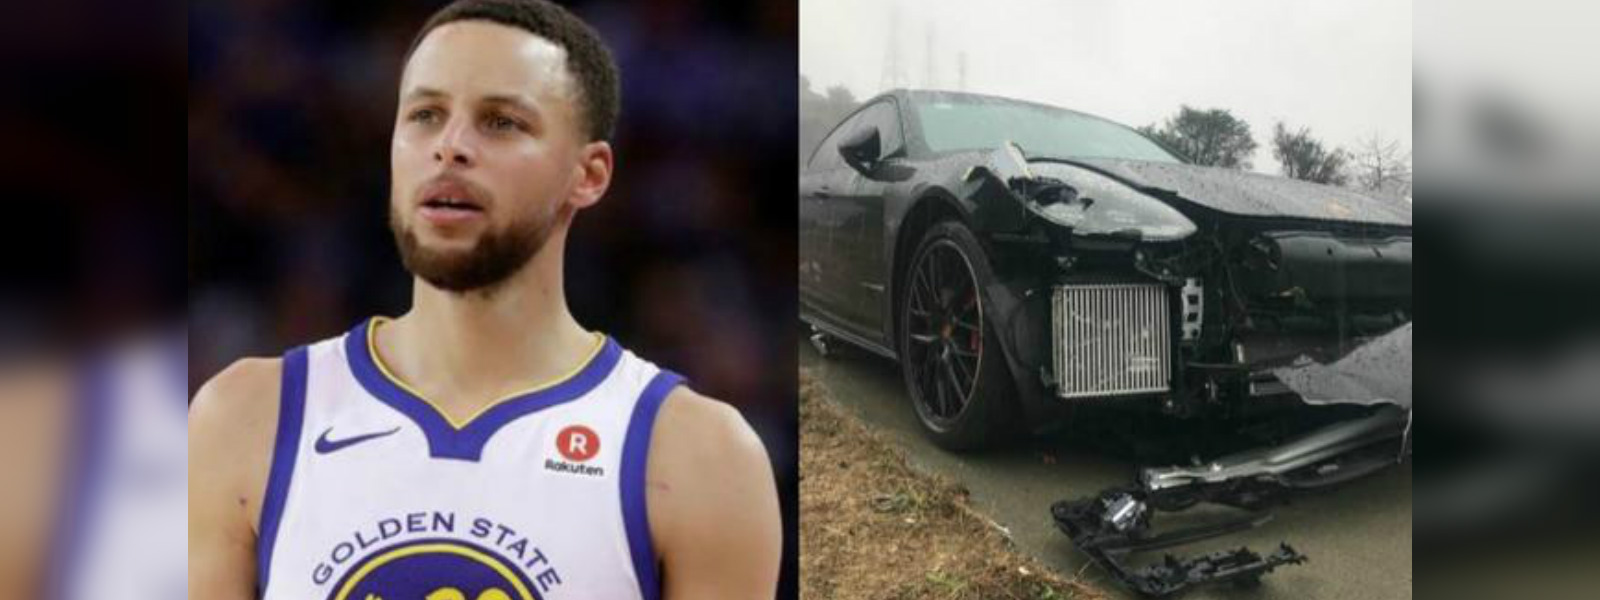 NBA star Steph Curry uninjured after car crash 